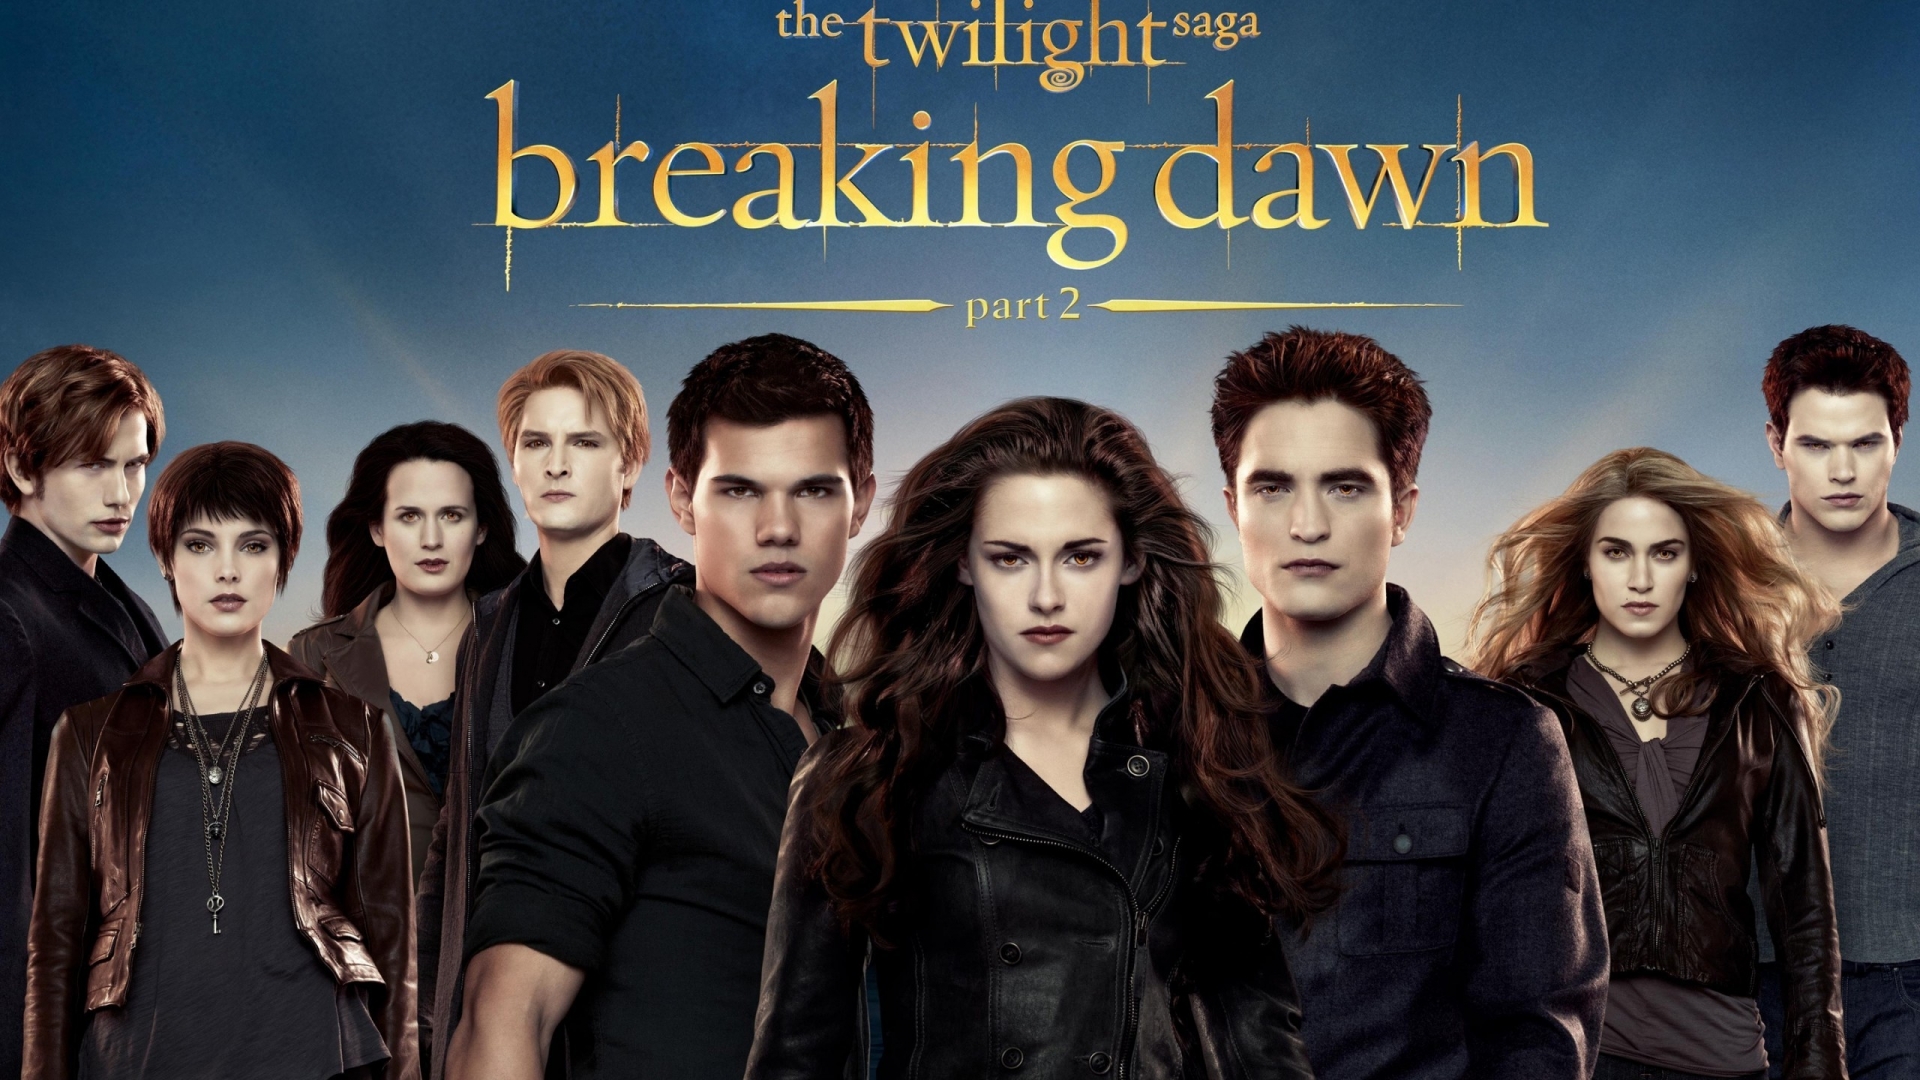 Twilight Saga Breaking Dawn Part 2 for 1920 x 1080 HDTV 1080p resolution